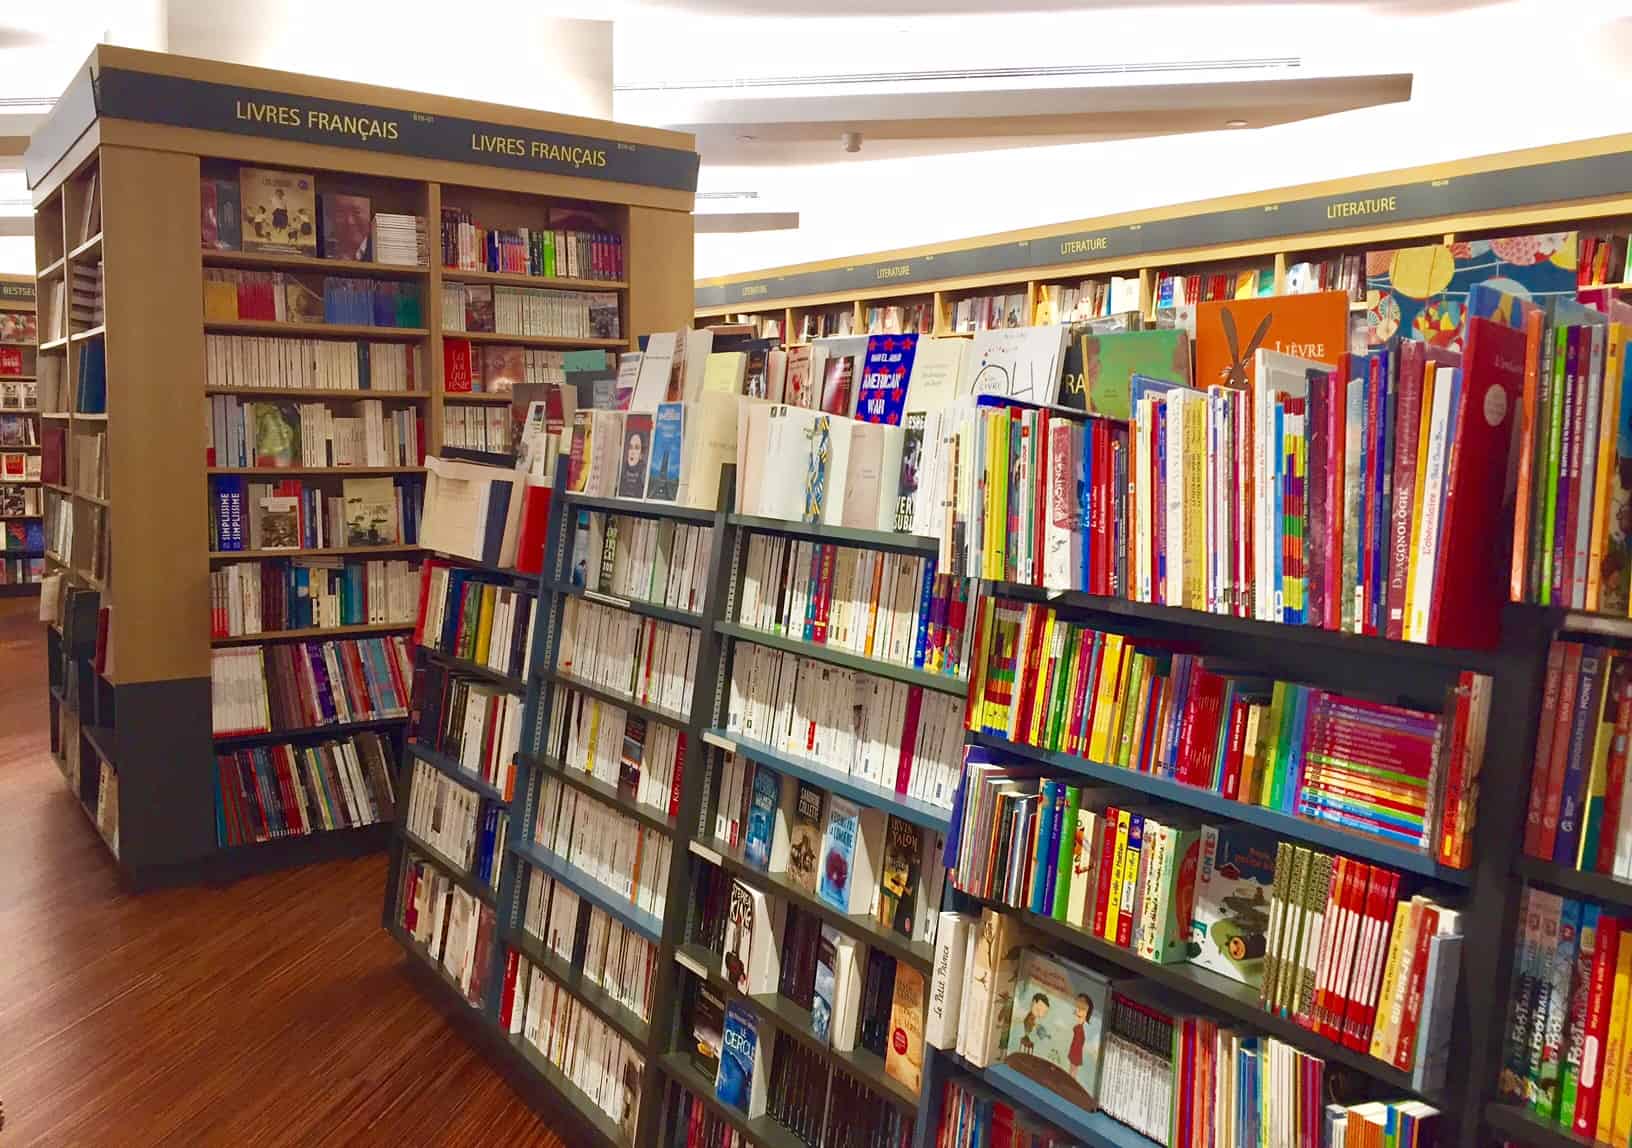  Toko Buku  di Singapura yang Terlengkap adalah Kinokuniya